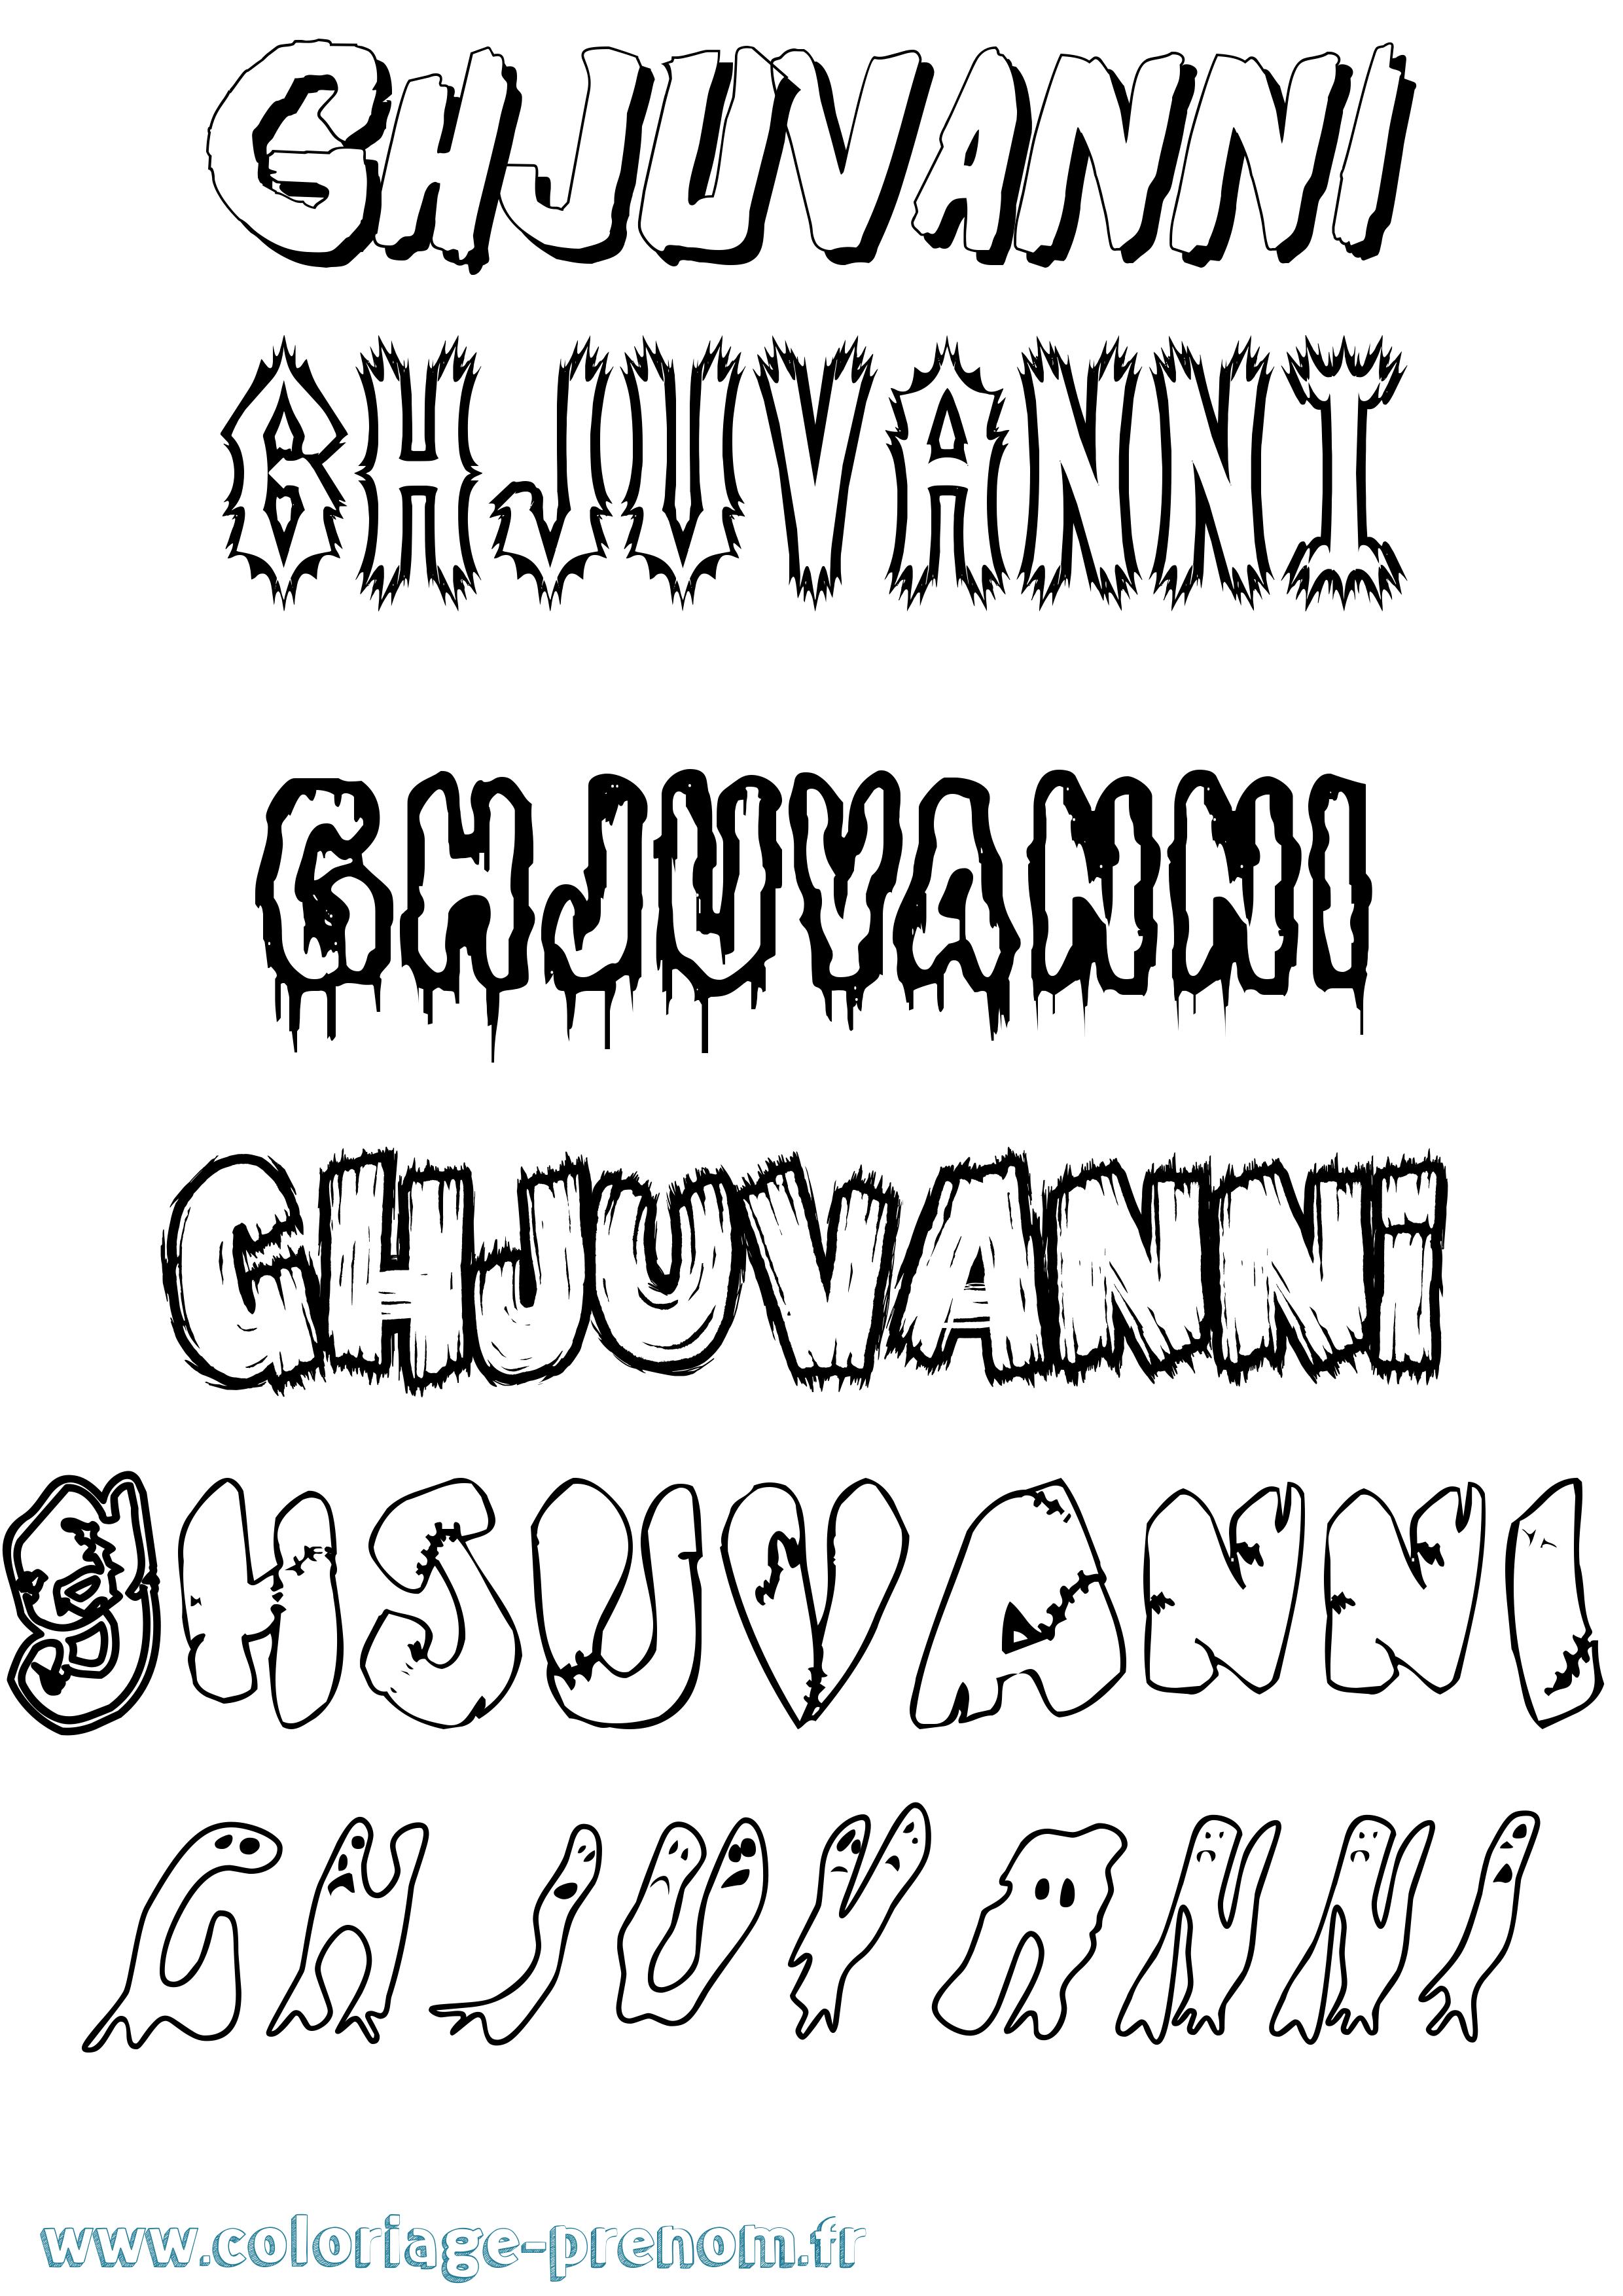 Coloriage prénom Ghjuvanni Frisson